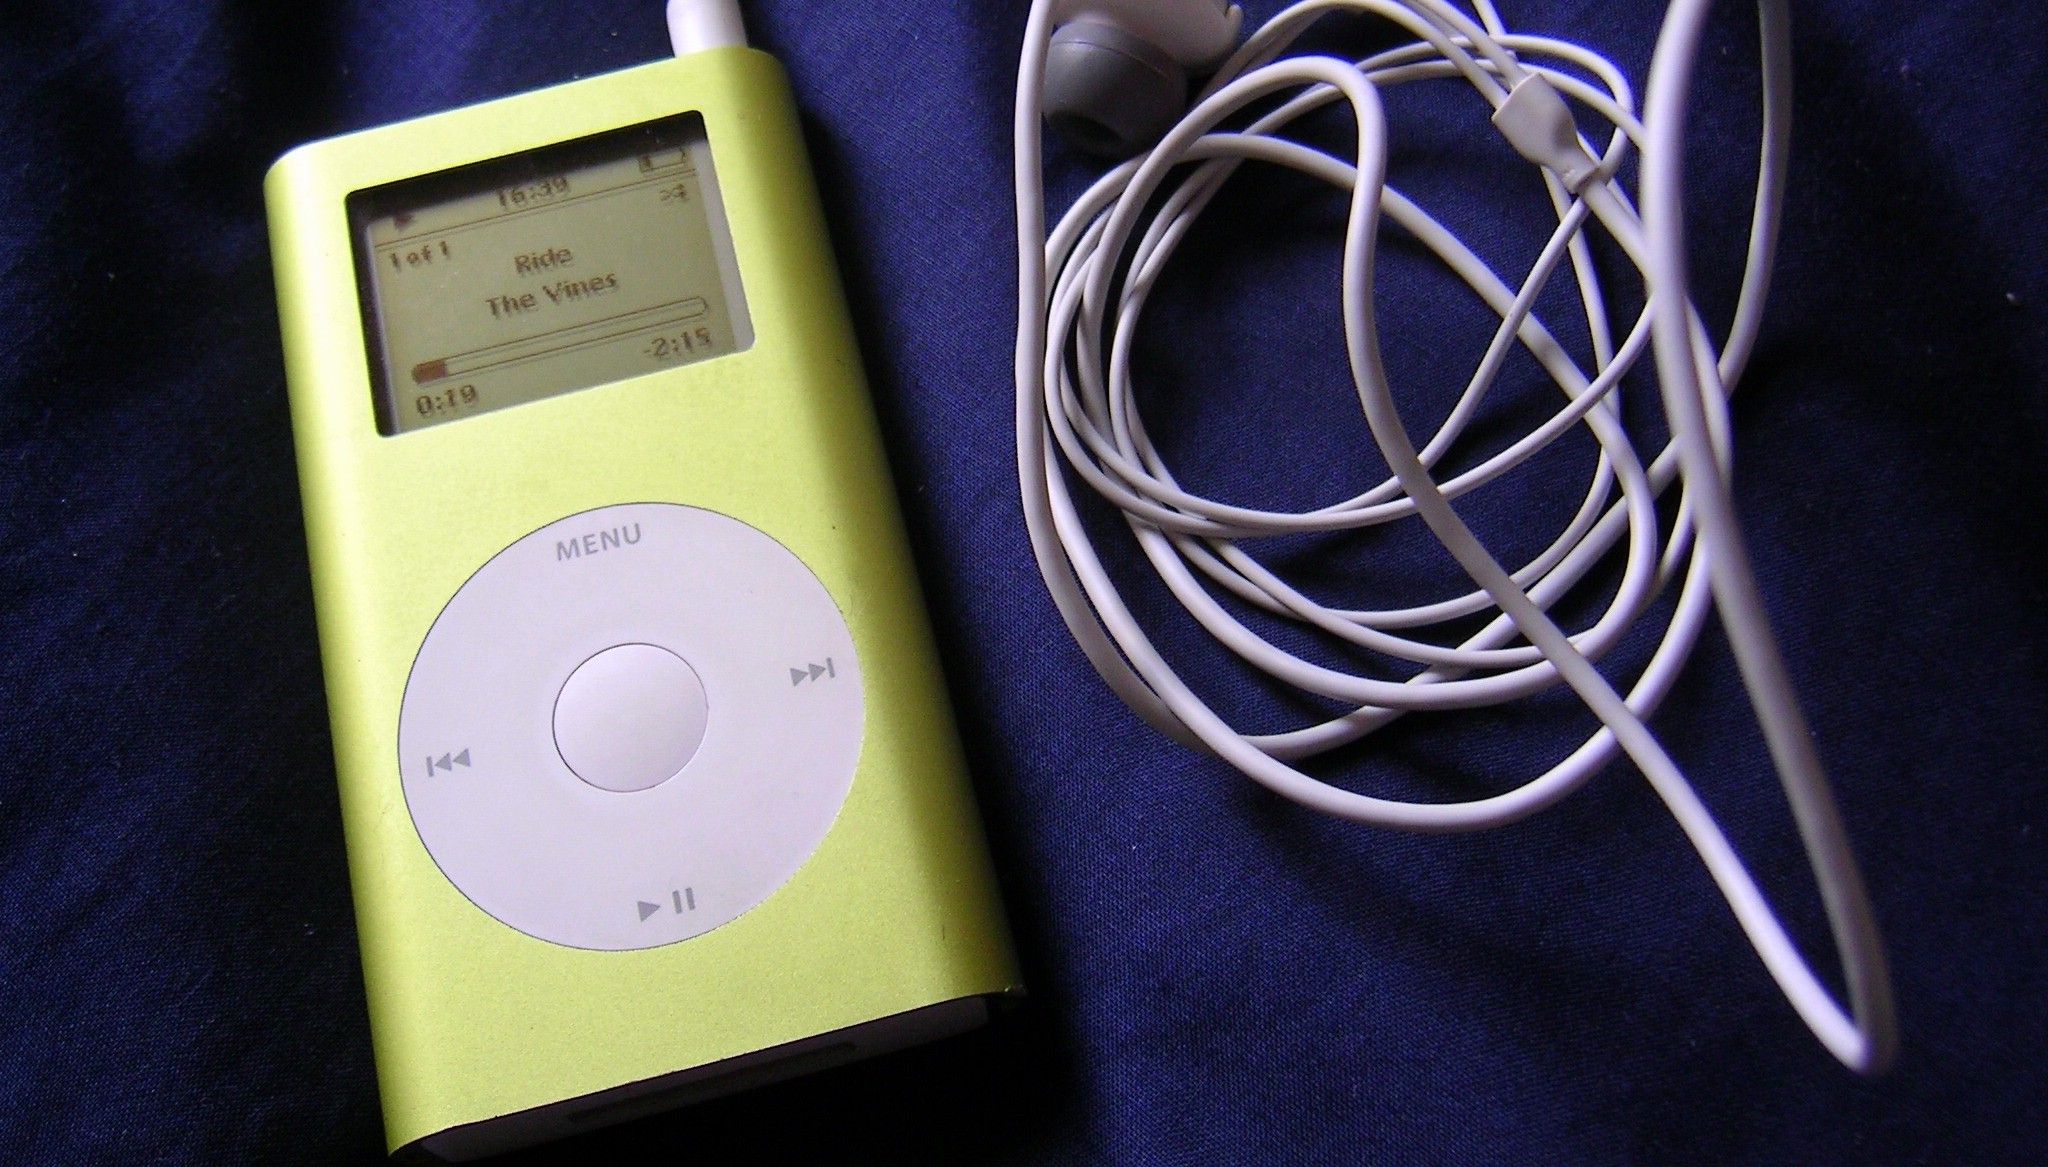 iPod Mini with headphones lies on fabric surface